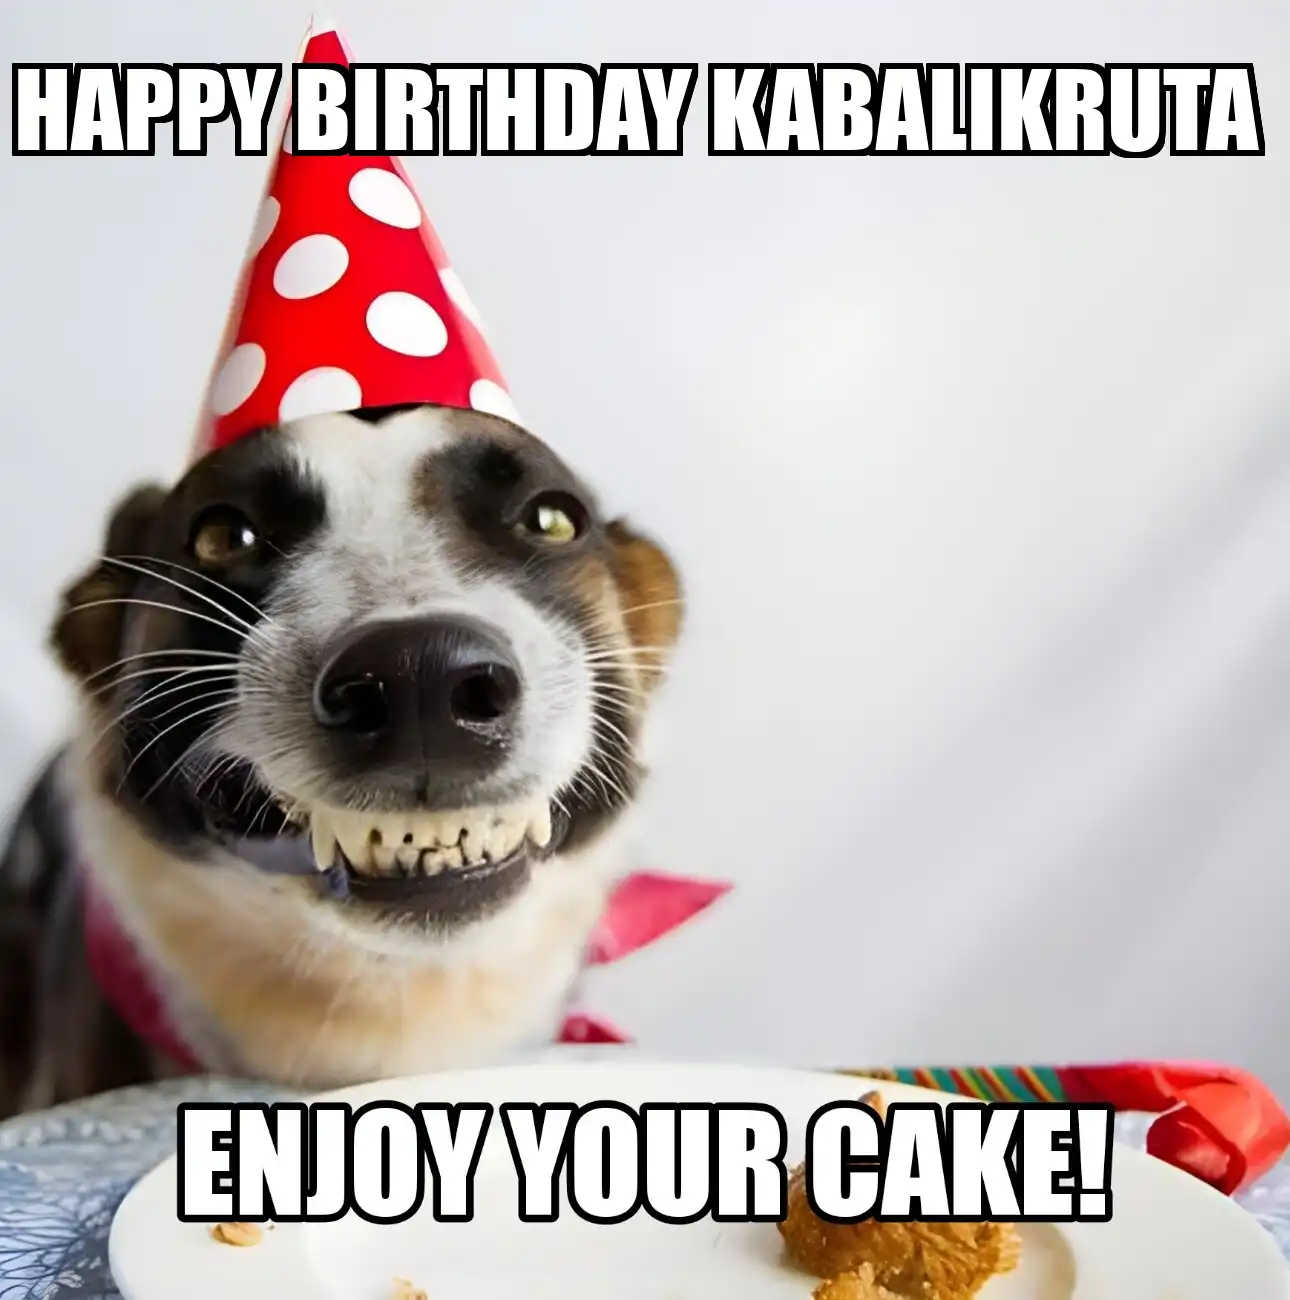 Happy Birthday Kabalikruta Enjoy Your Cake Dog Meme